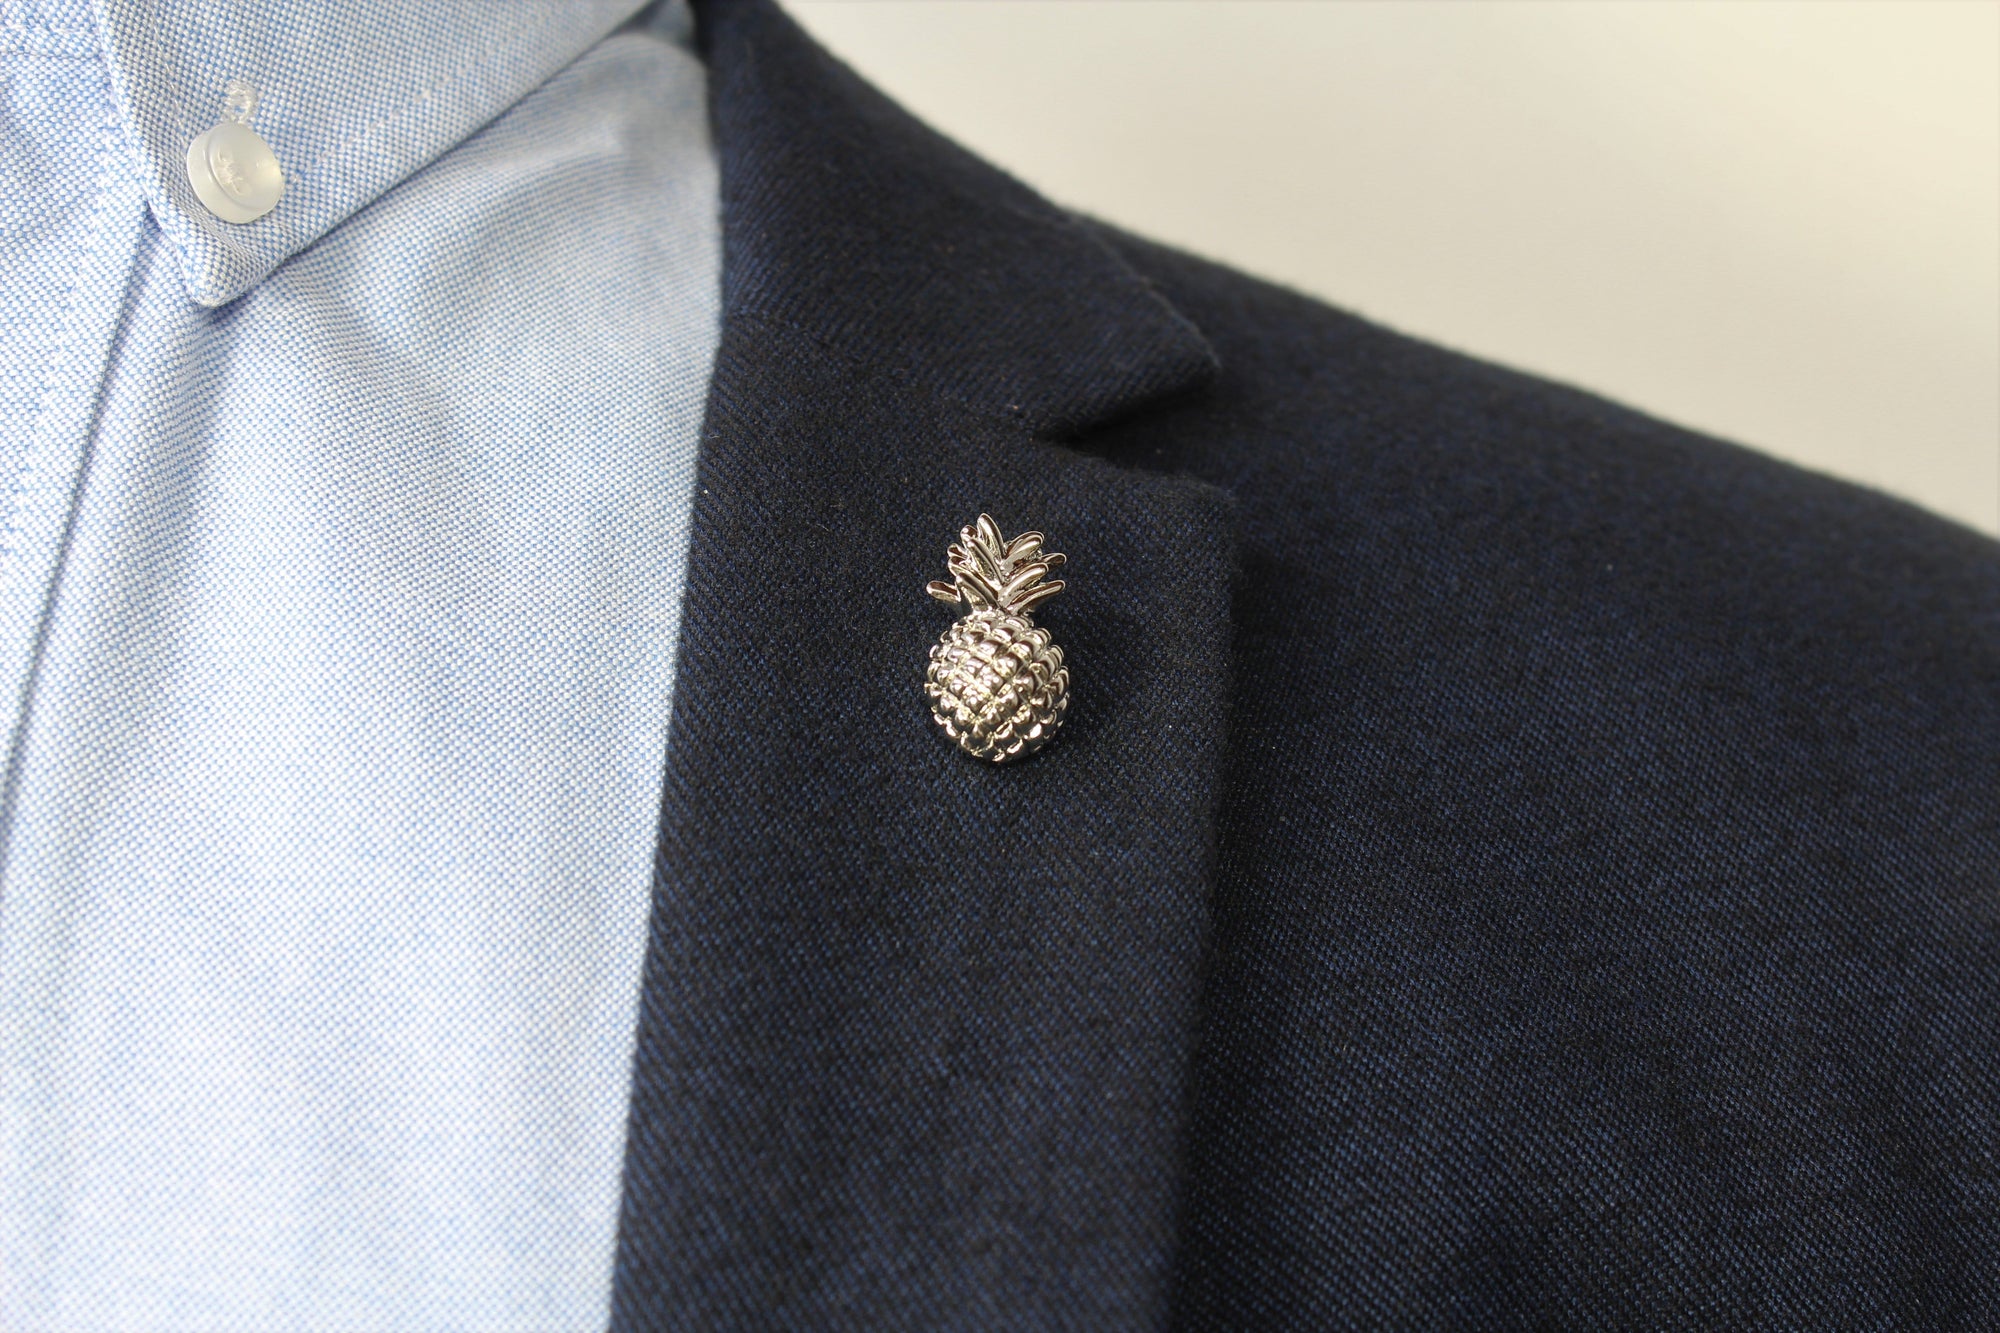 Pineapple Lapel Pin on blazer - Stolen Riches